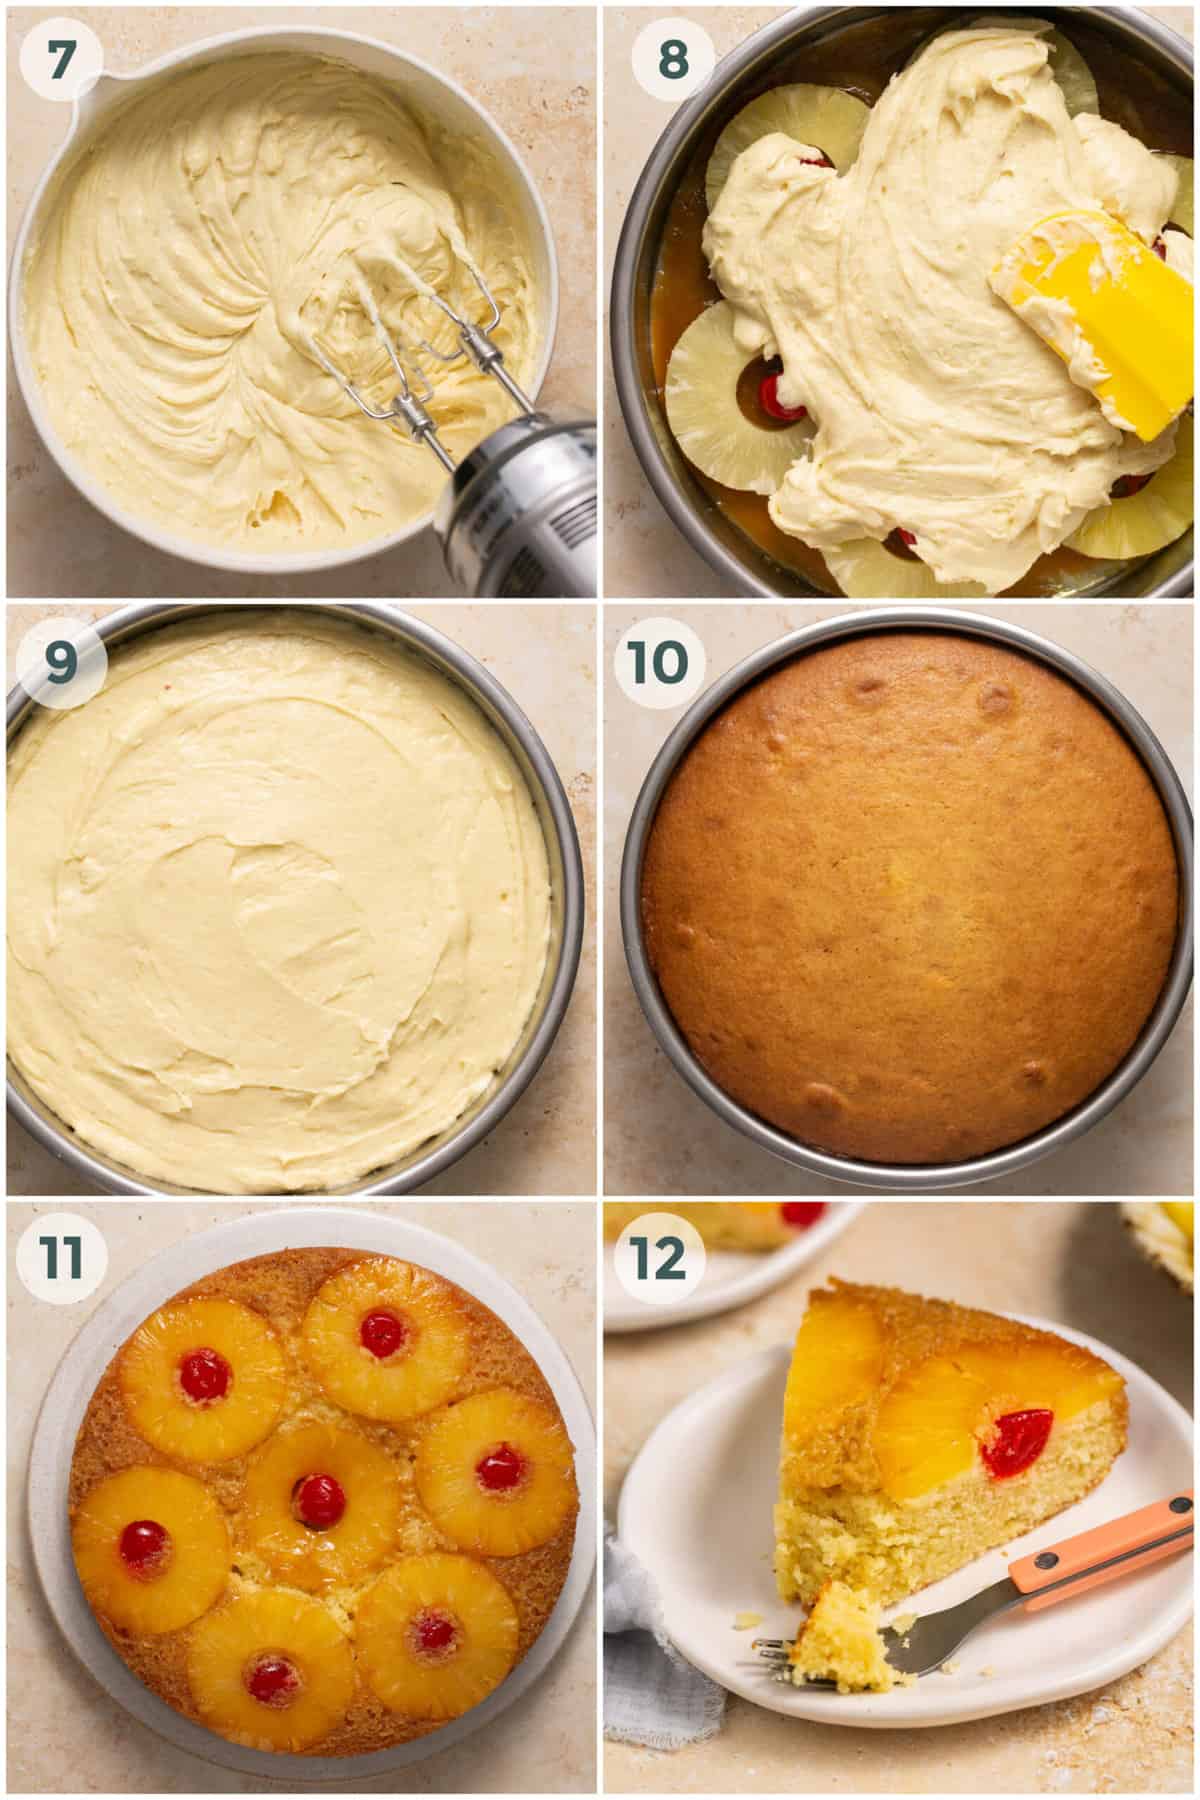 steps 6-12 of preparing pineapple upside down cake recipe